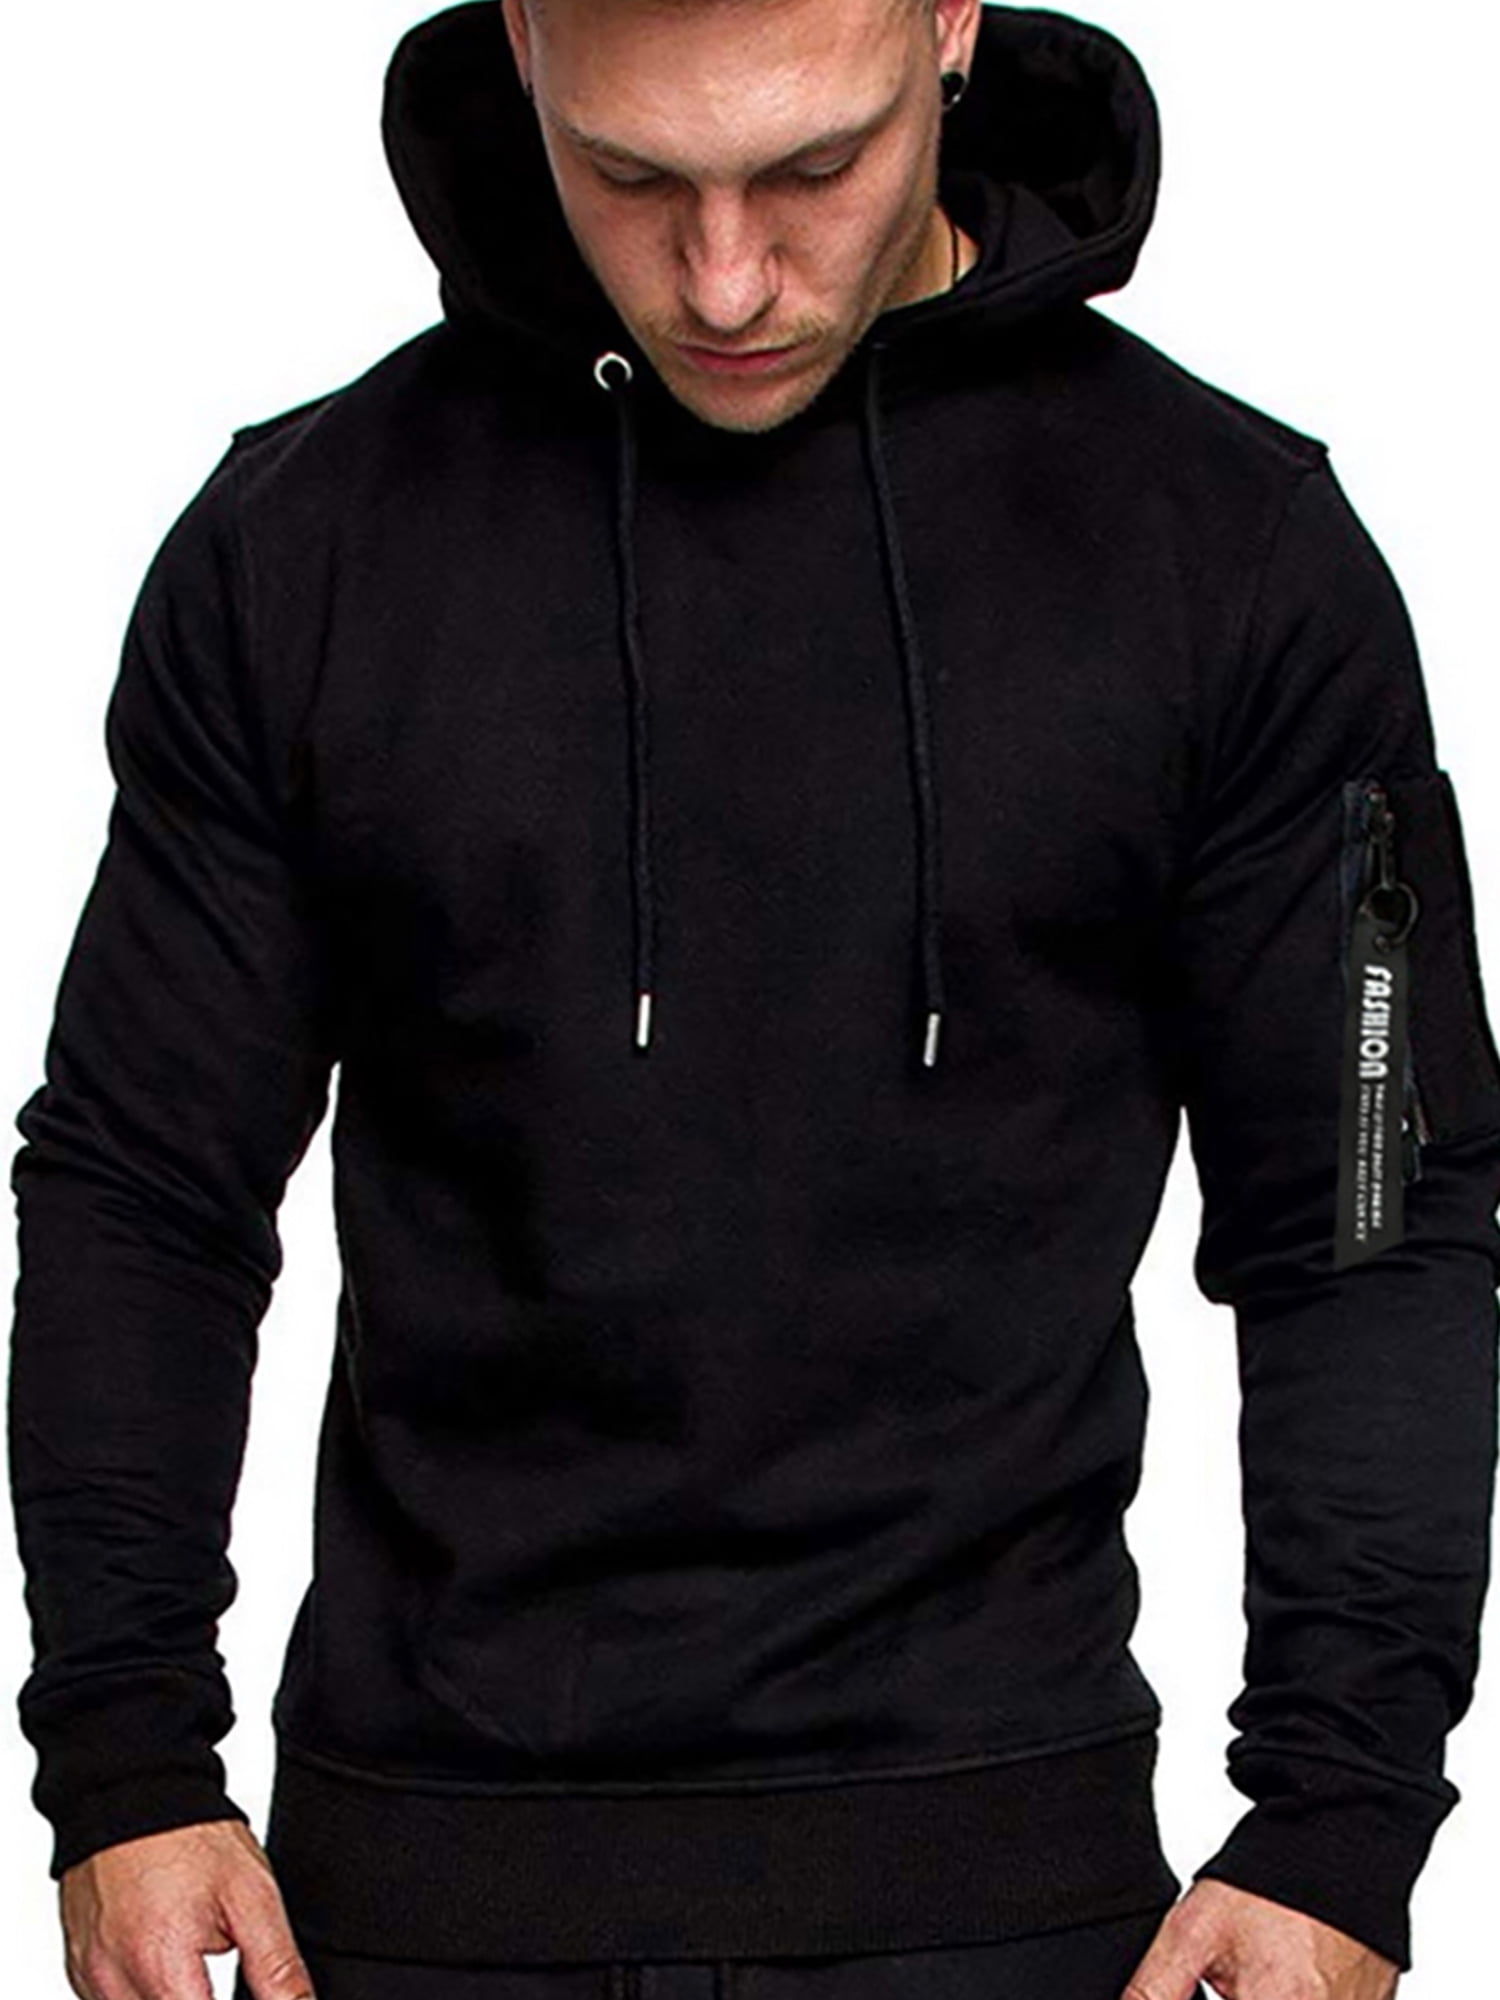 Men's Hooded Hoodies Tops Shirts Zipper Long sleeve Sweatshirt Sport Casual New 